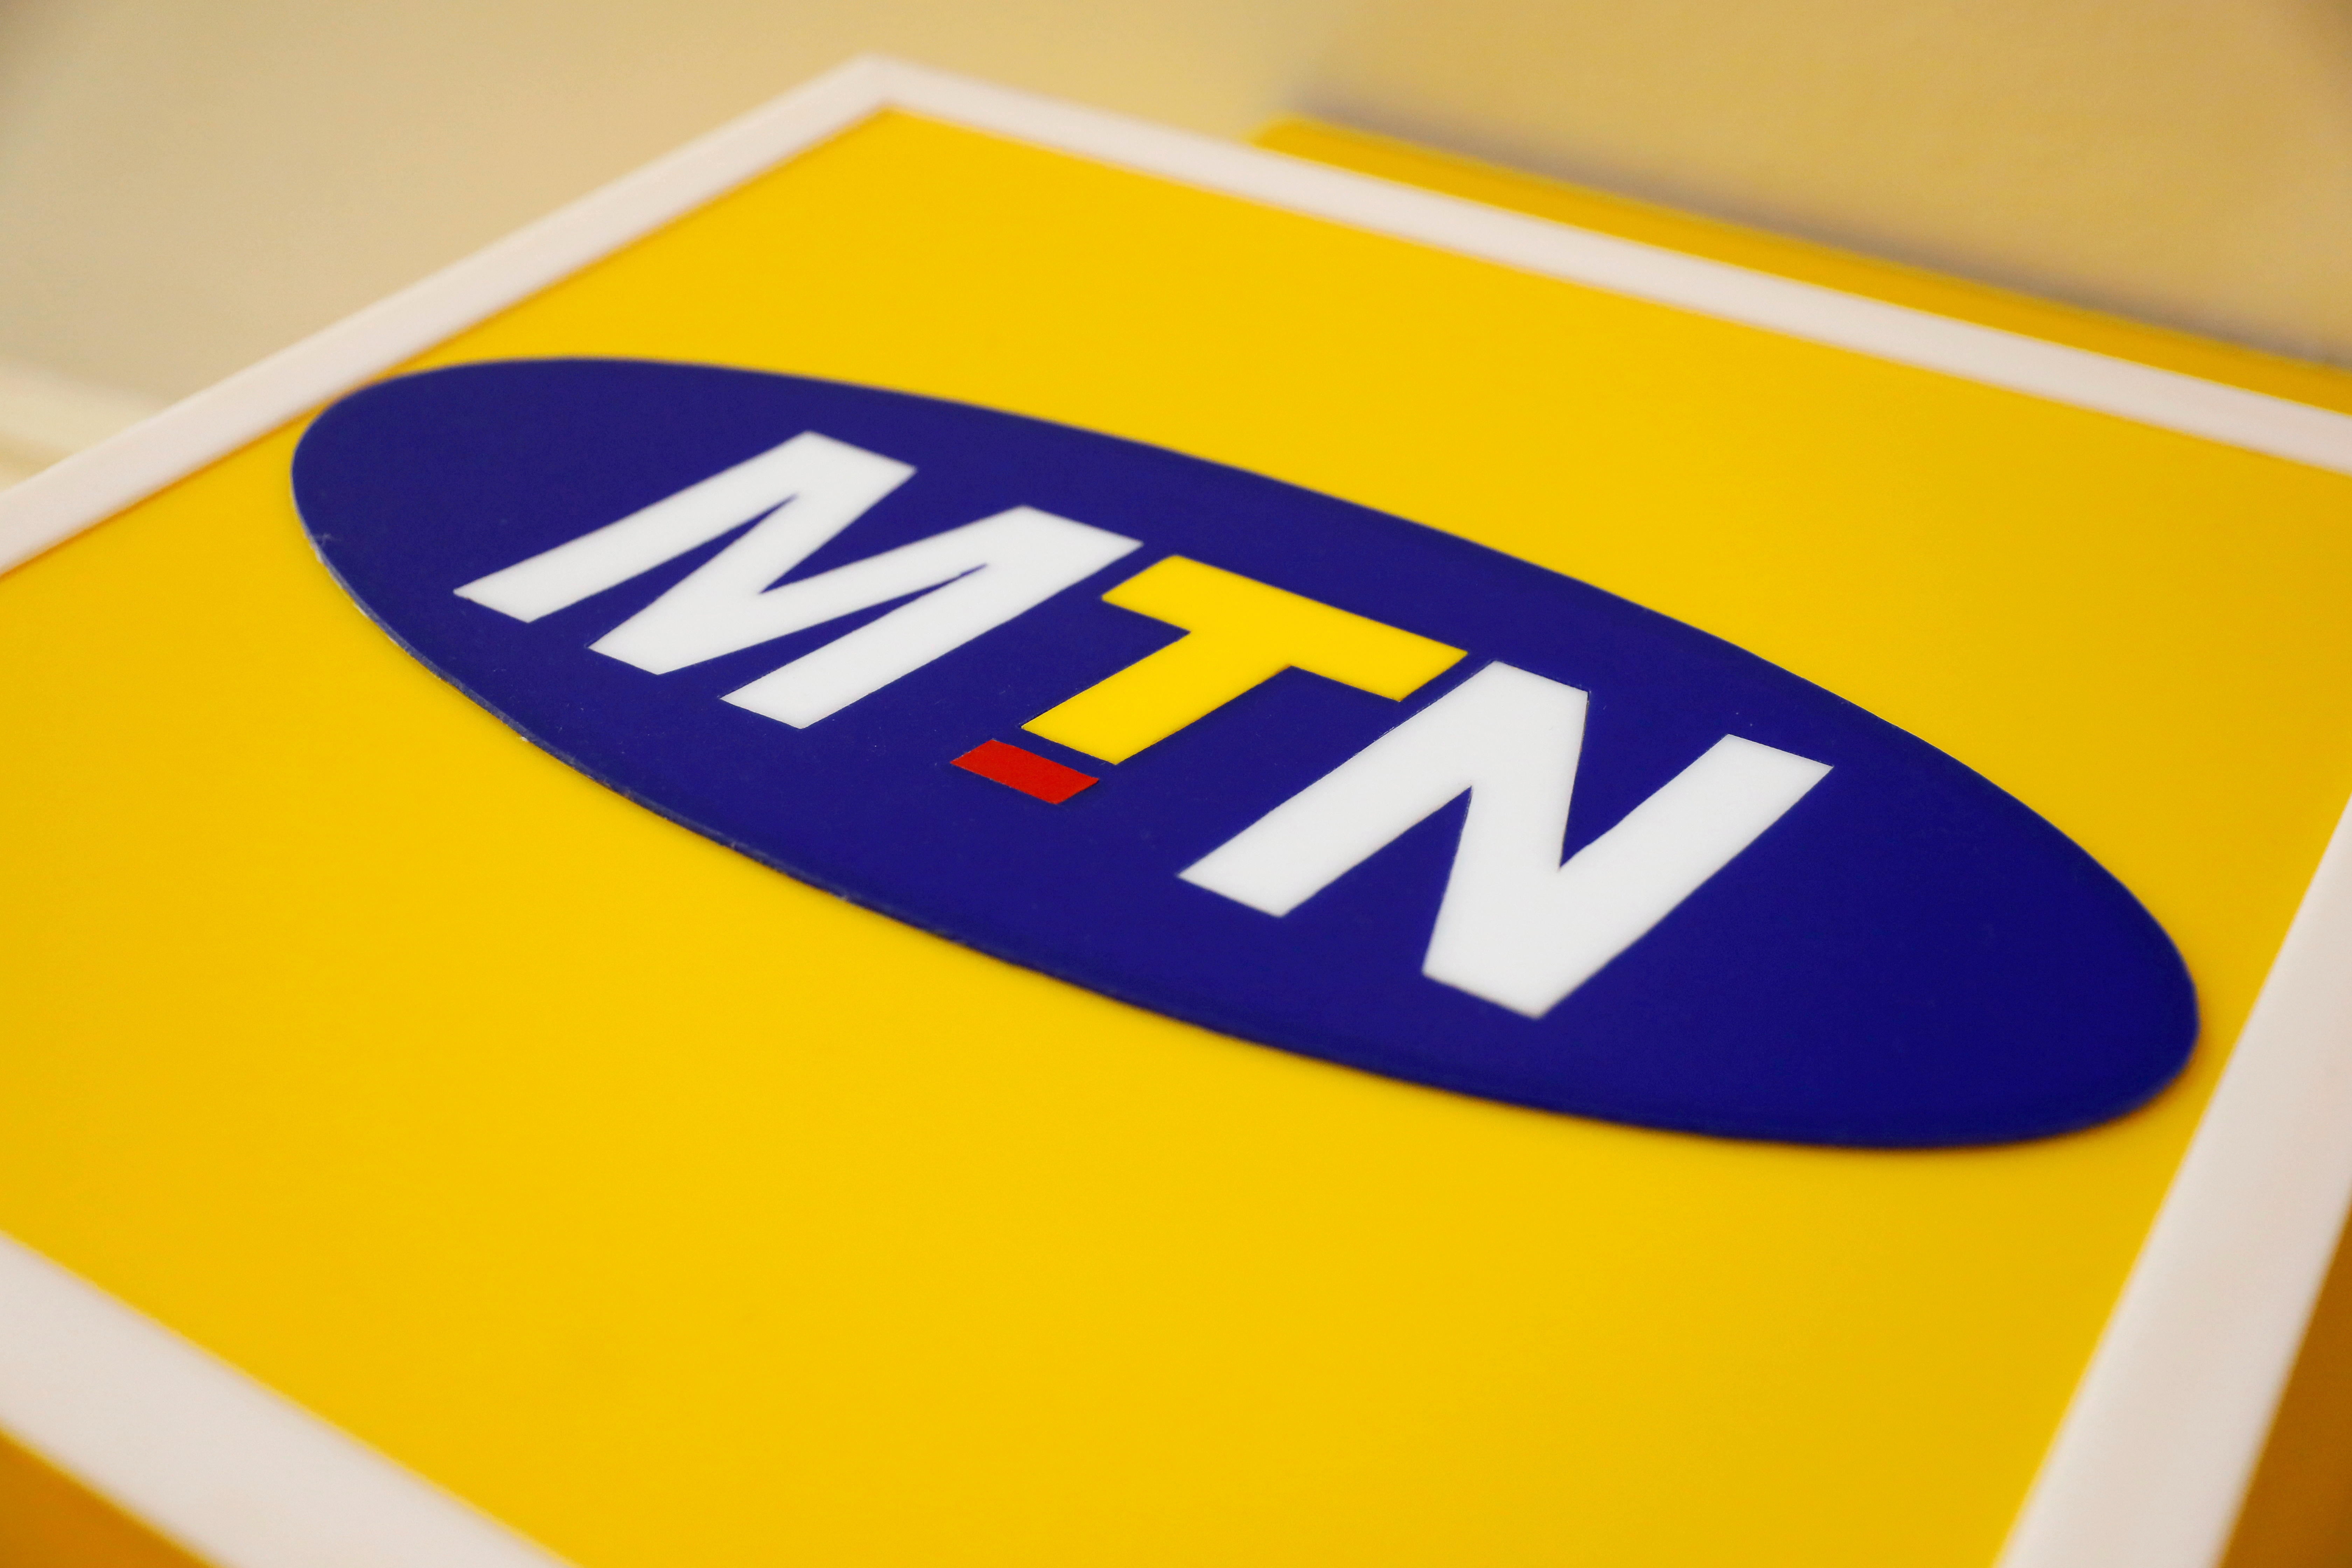 The logo of MTN. 
REUTERS/Afolabi Sotunde